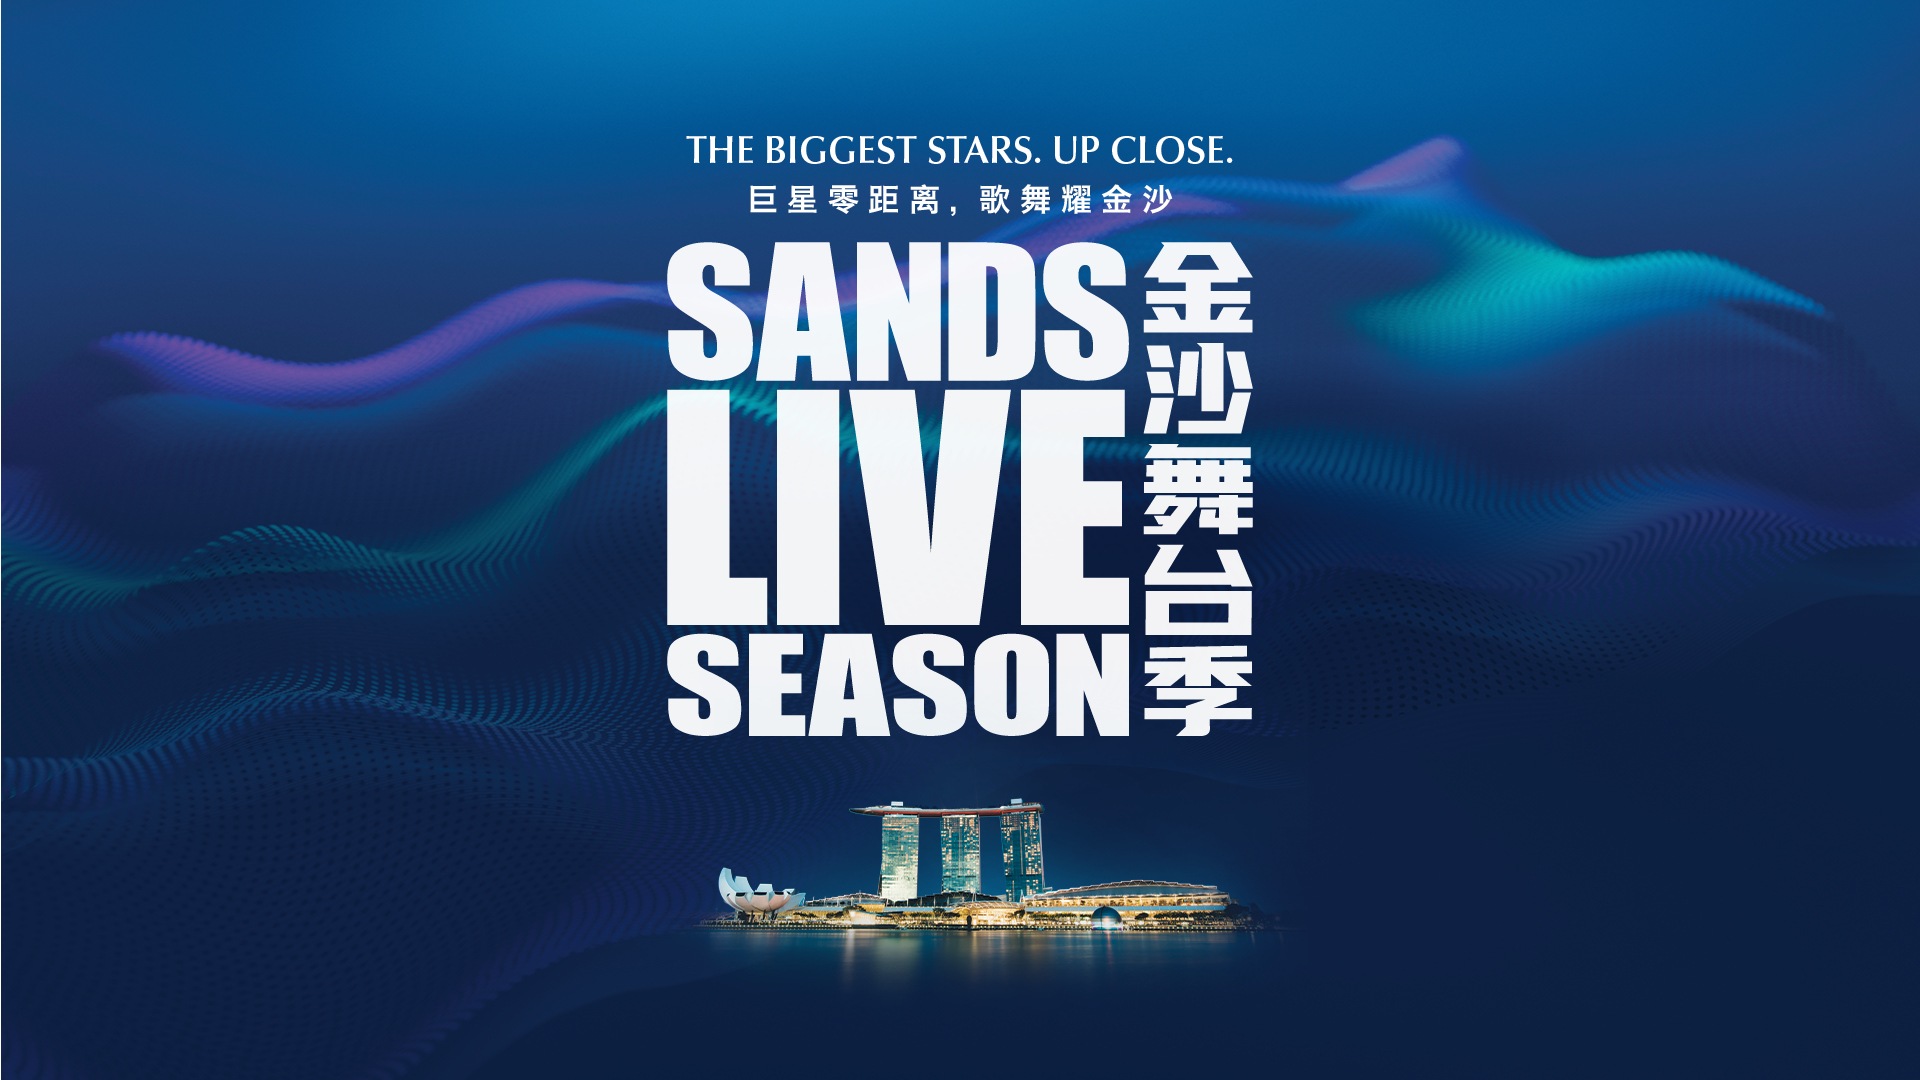 Sands Live Season